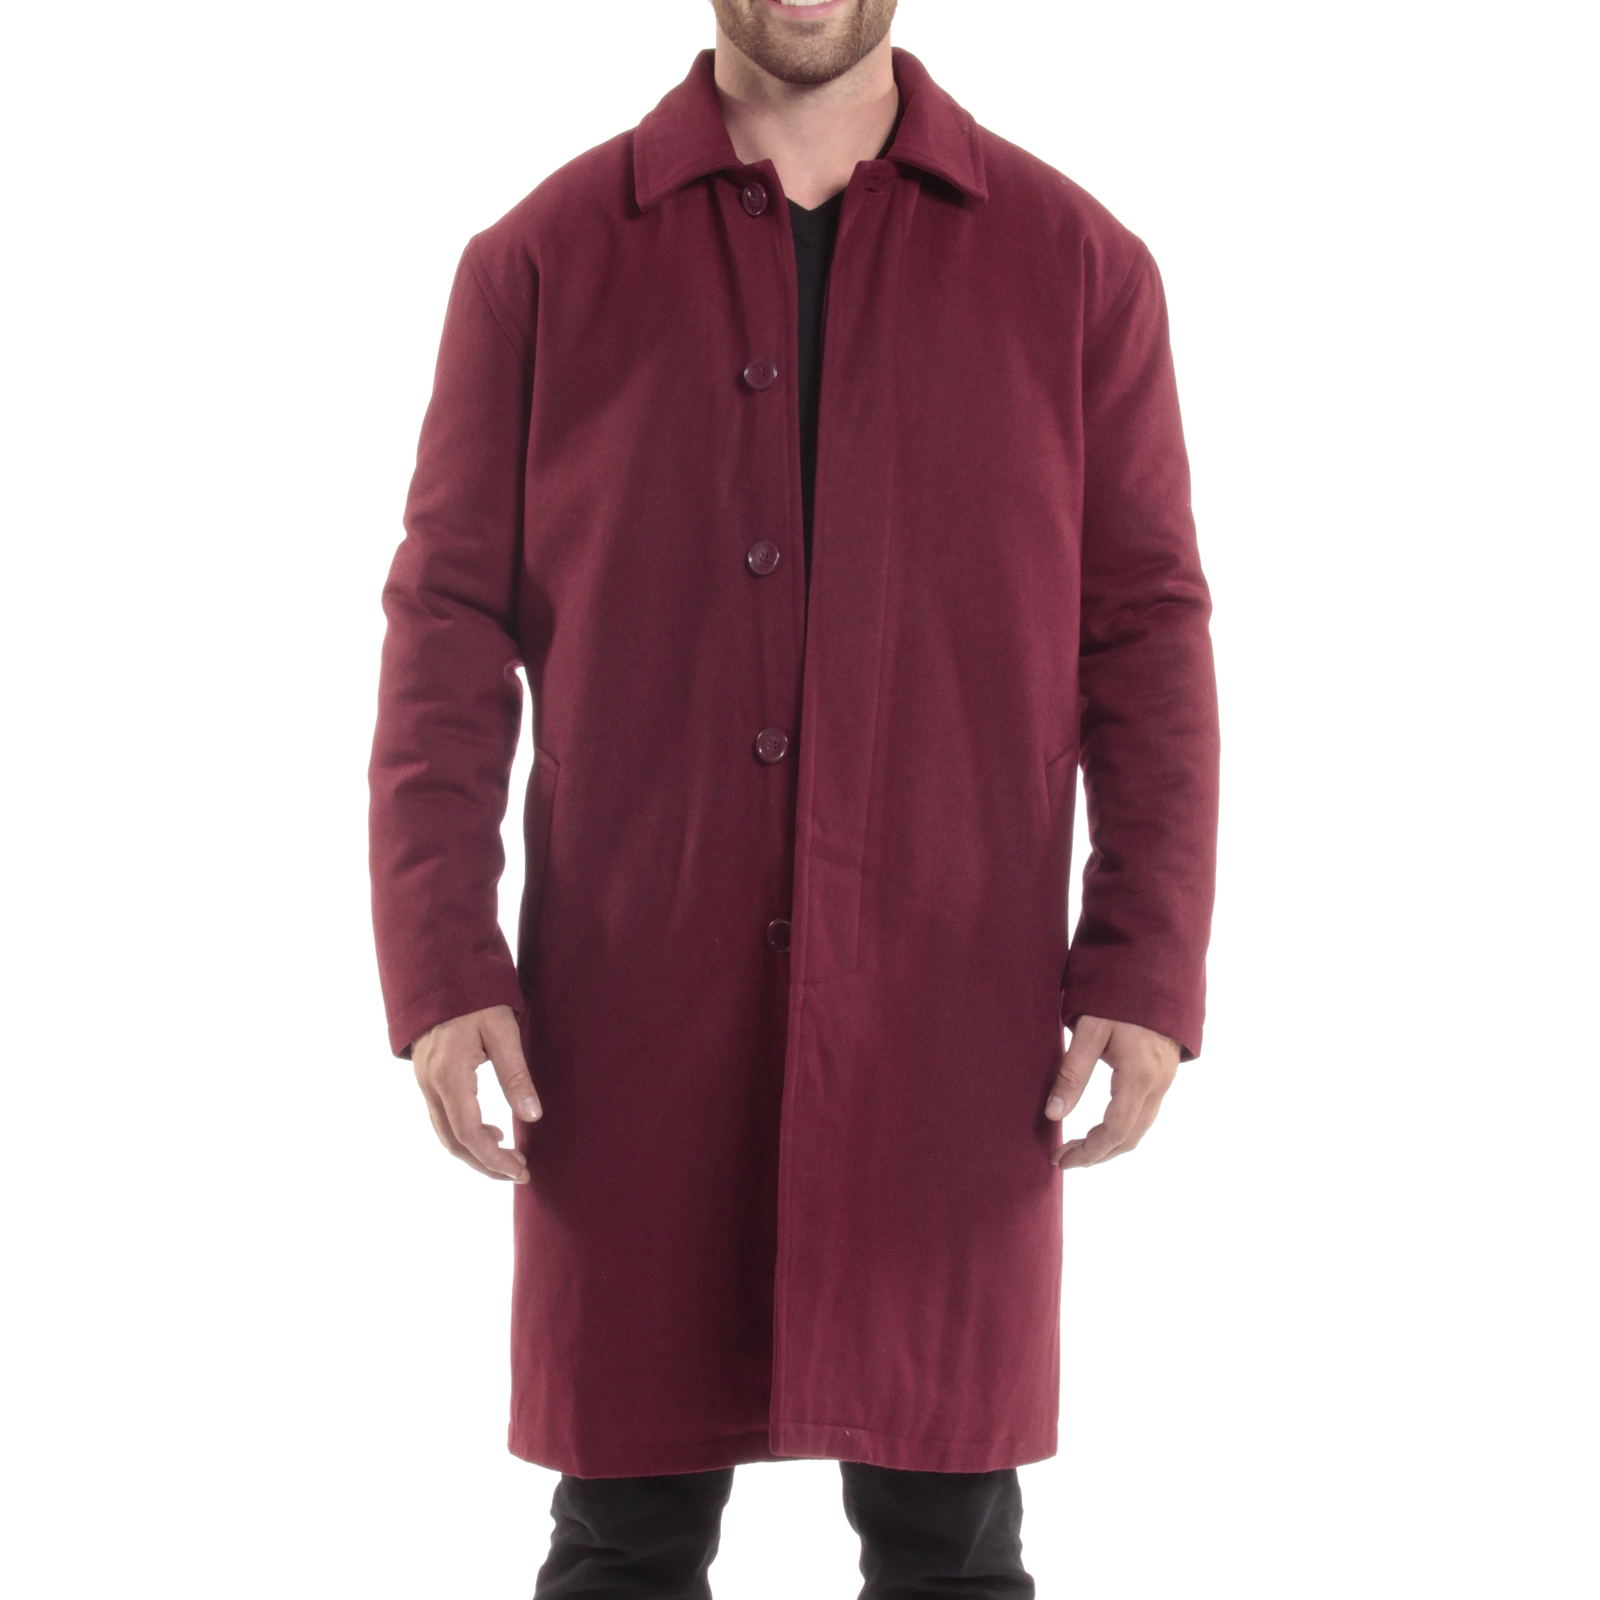 Alpine Swiss Mens Zach Knee Length Jacket Top Coat Trench Wool Blend Overcoat - image 1 of 7